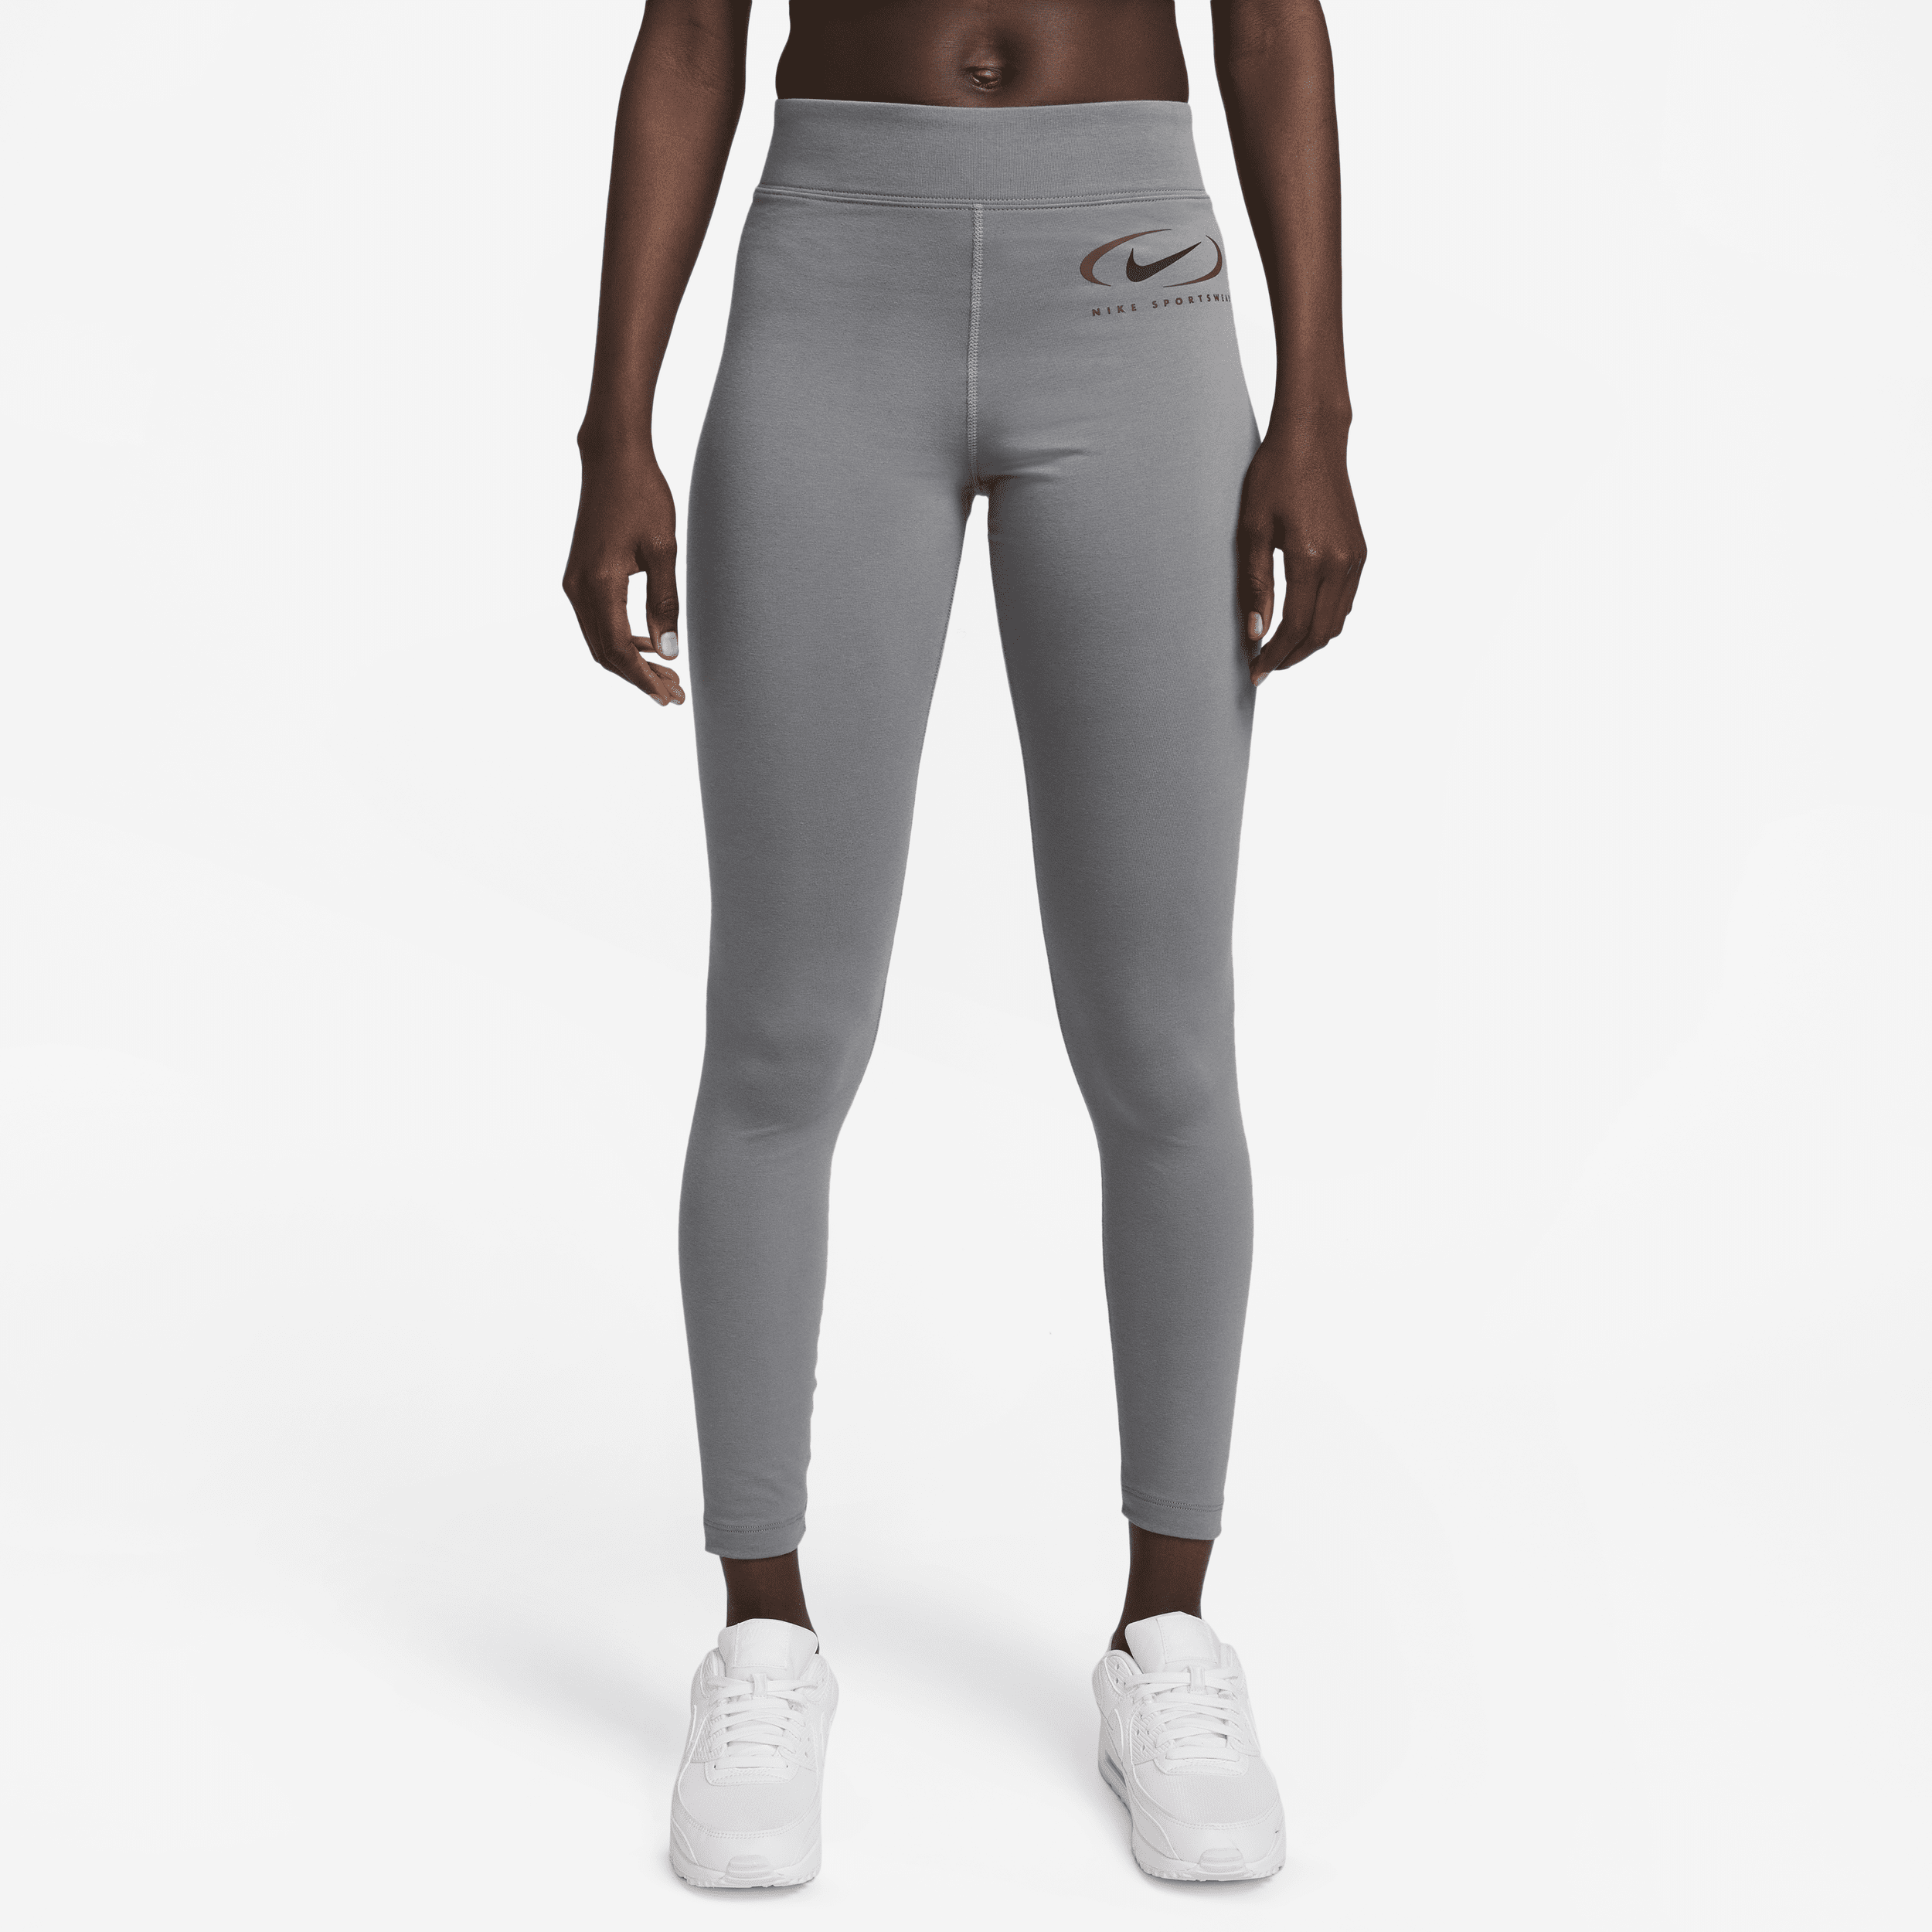 Nike Sportswear lange legging met hoge taille en graphic voor dames - Grijs